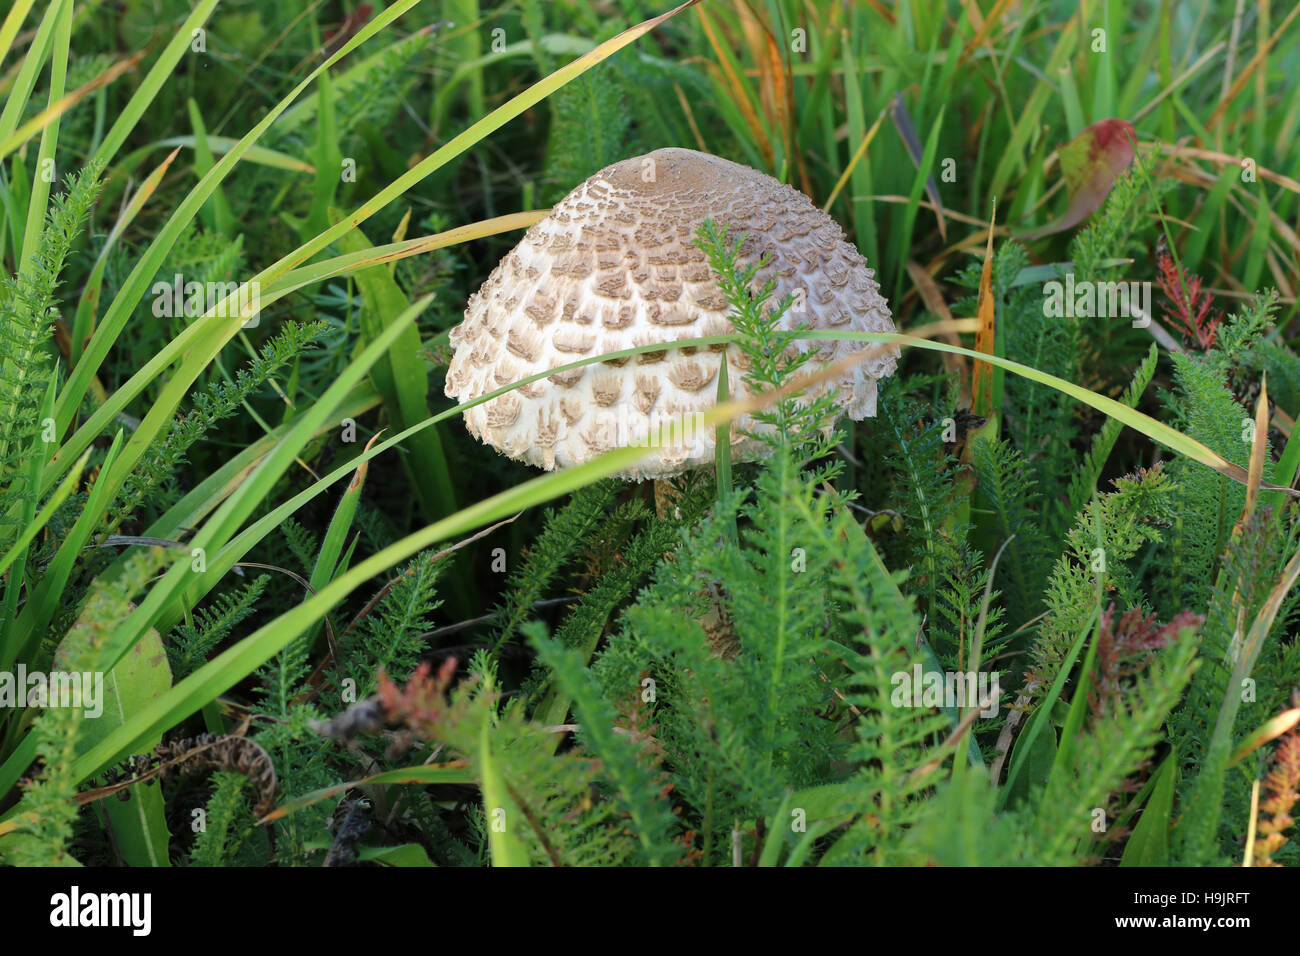 Small ragged parasol mushroom in the grass Stock Photo